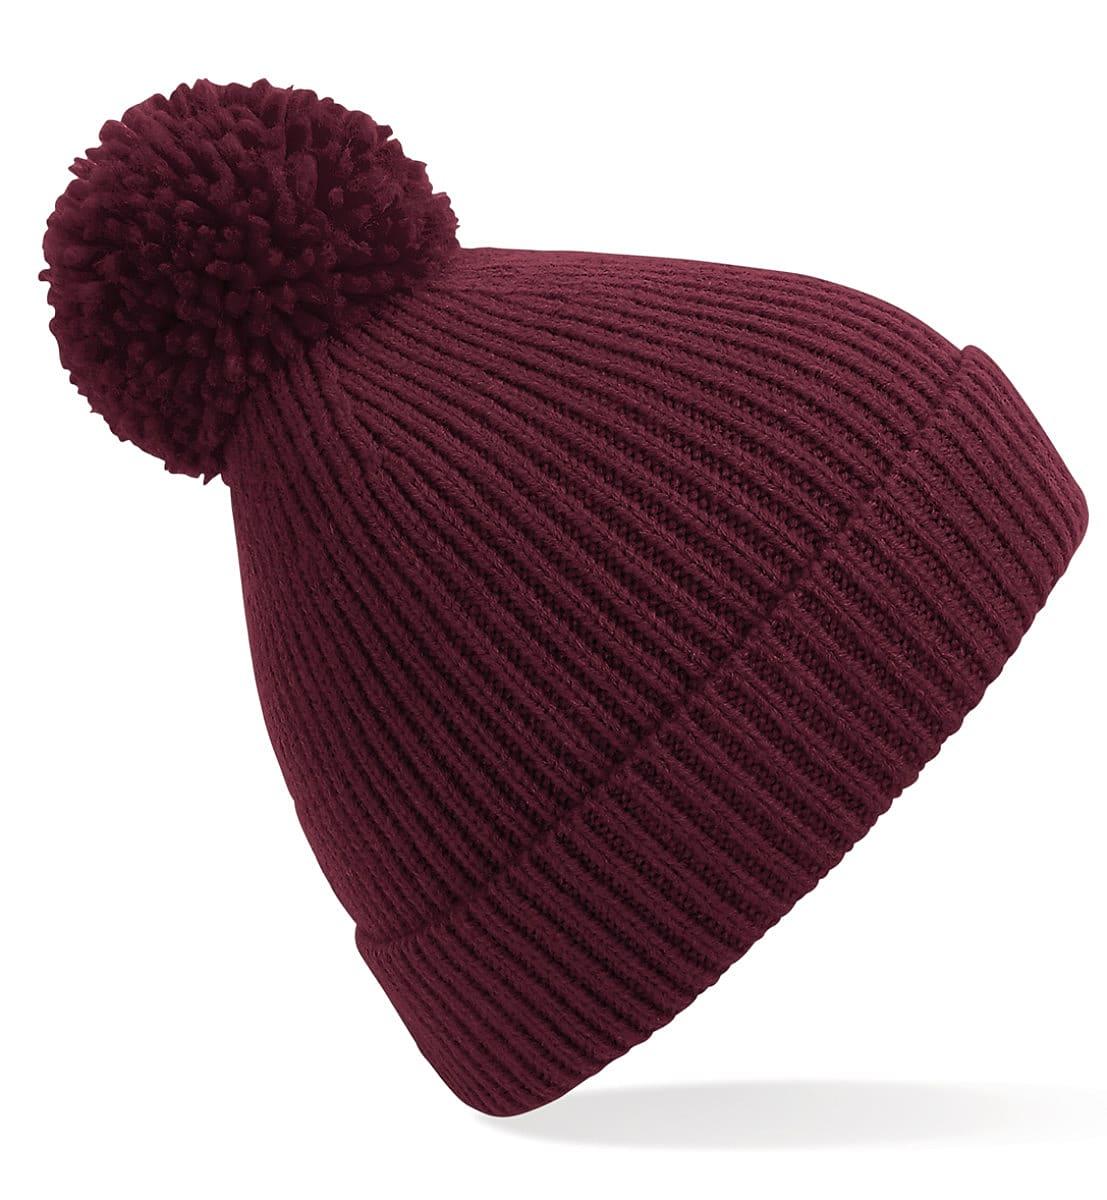 Beechfield Knit Ribbed Pom Pom Beanie Hat in Burgundy (Product Code: B382)